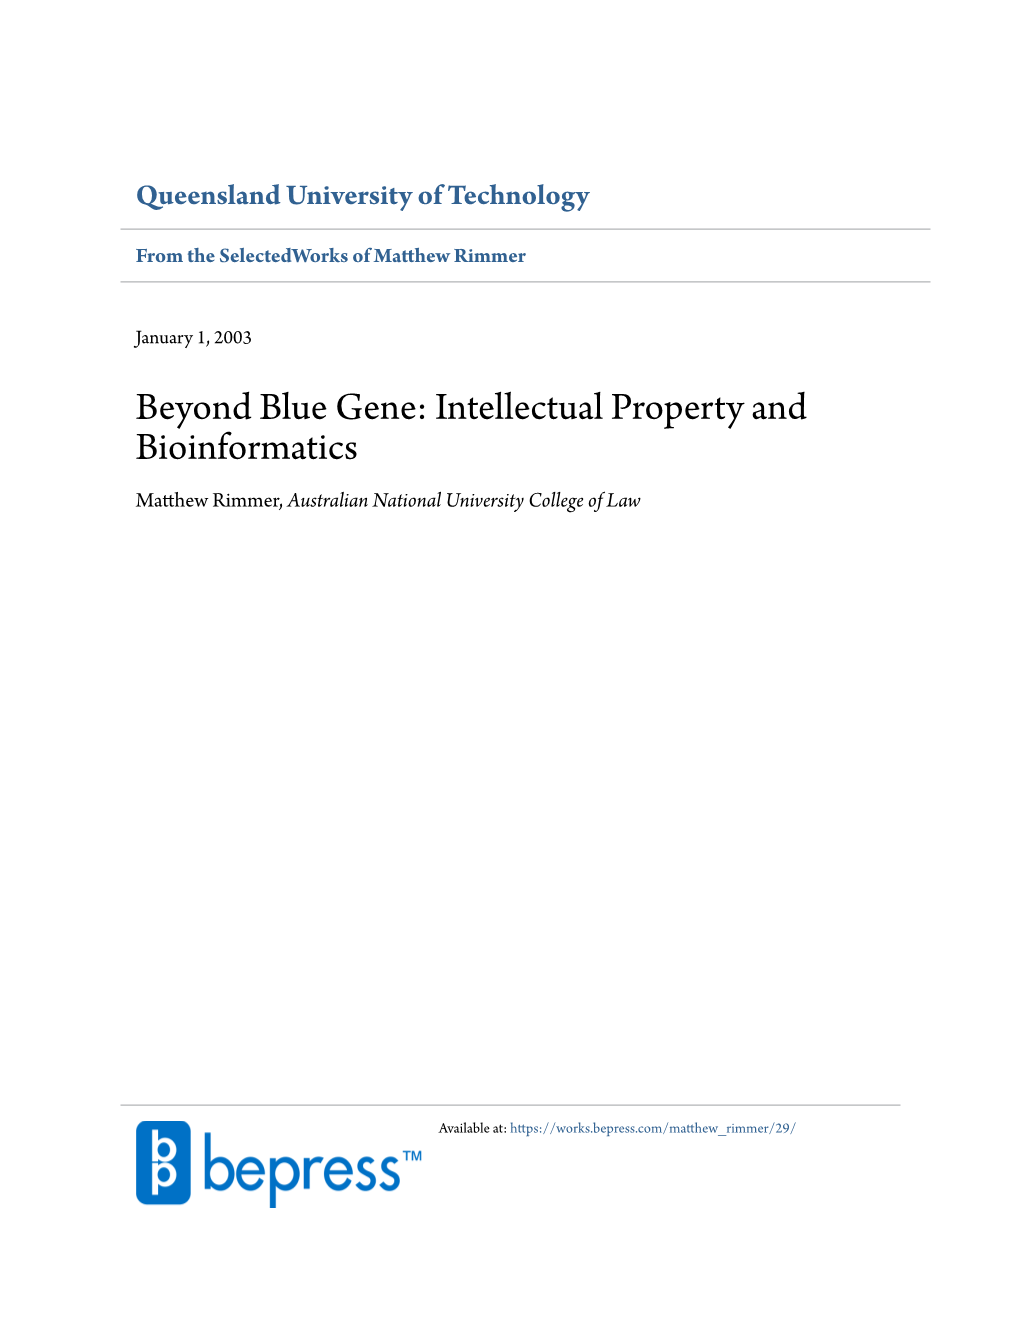 Beyond Blue Gene: Intellectual Property and Bioinformatics Matthew Rimmer, Australian National University College of Law